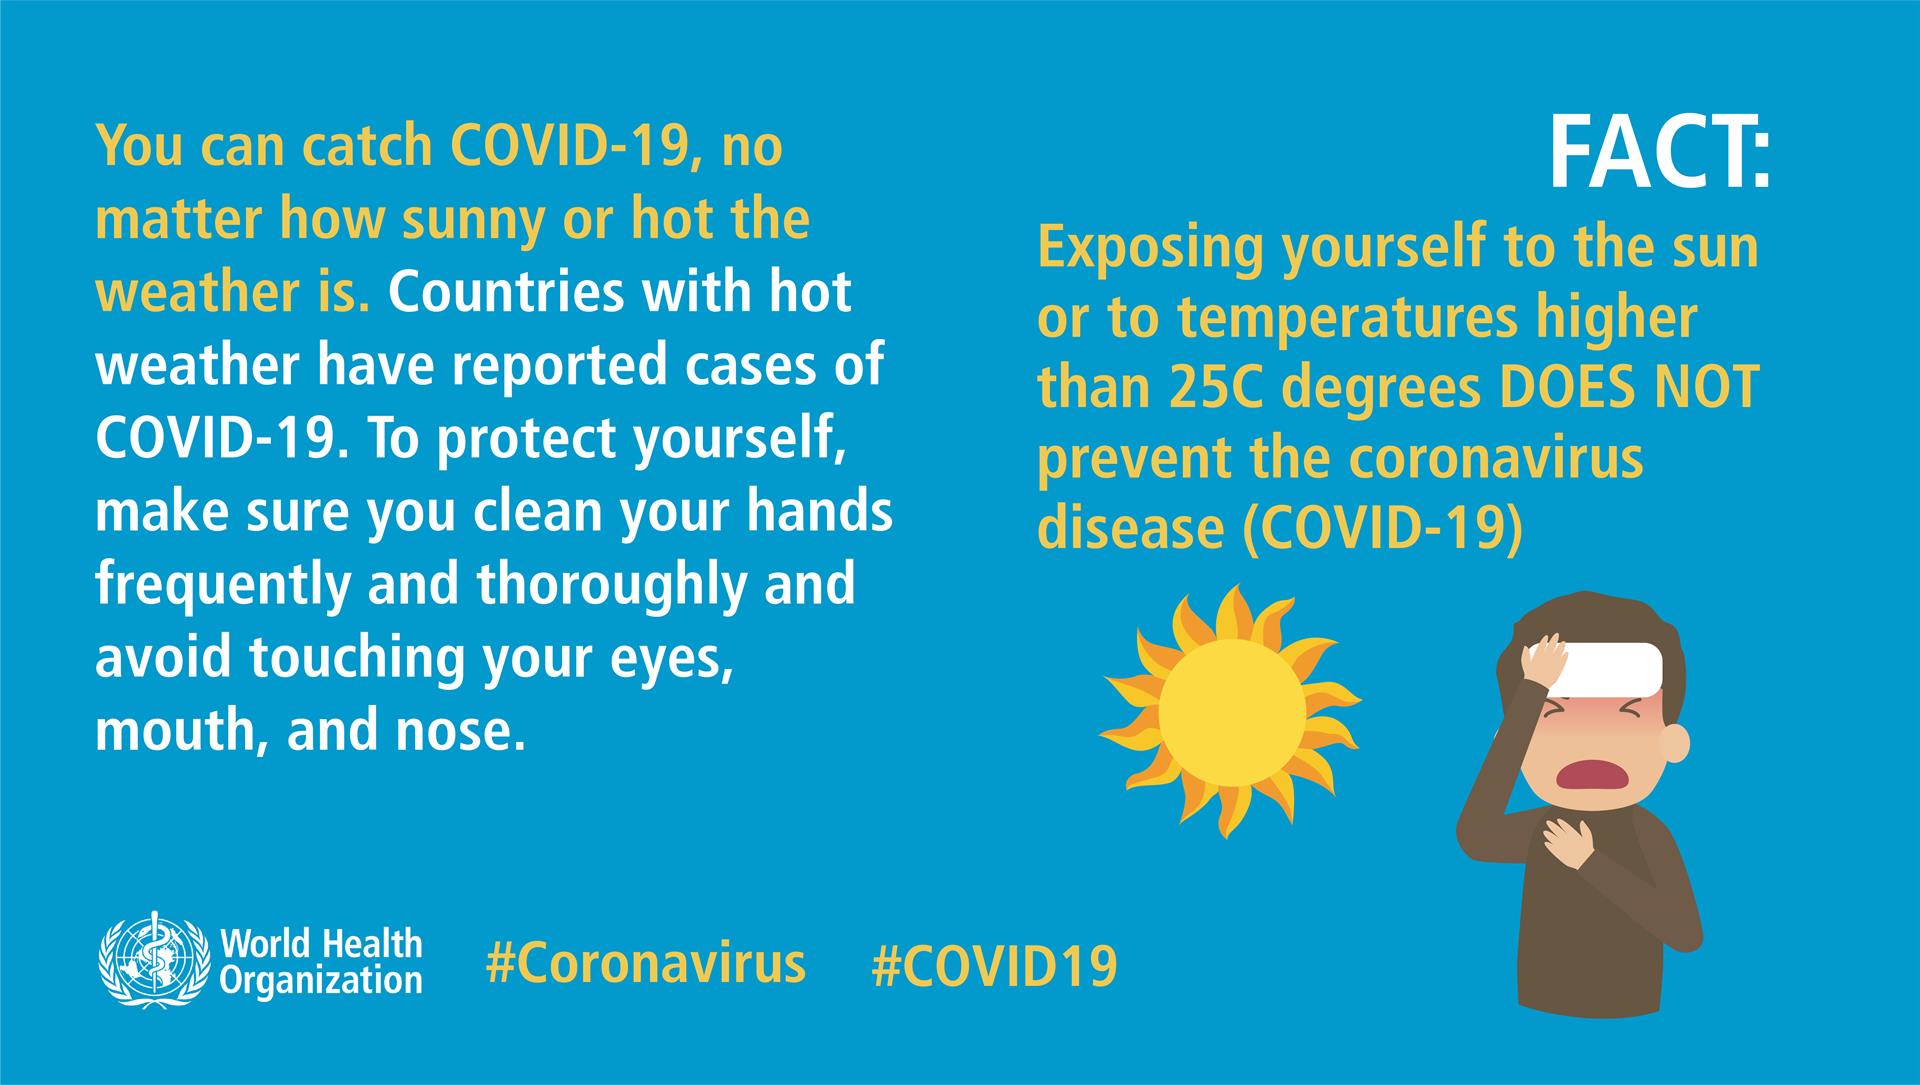 sun exposure does not prevent coronavirus info-graphic